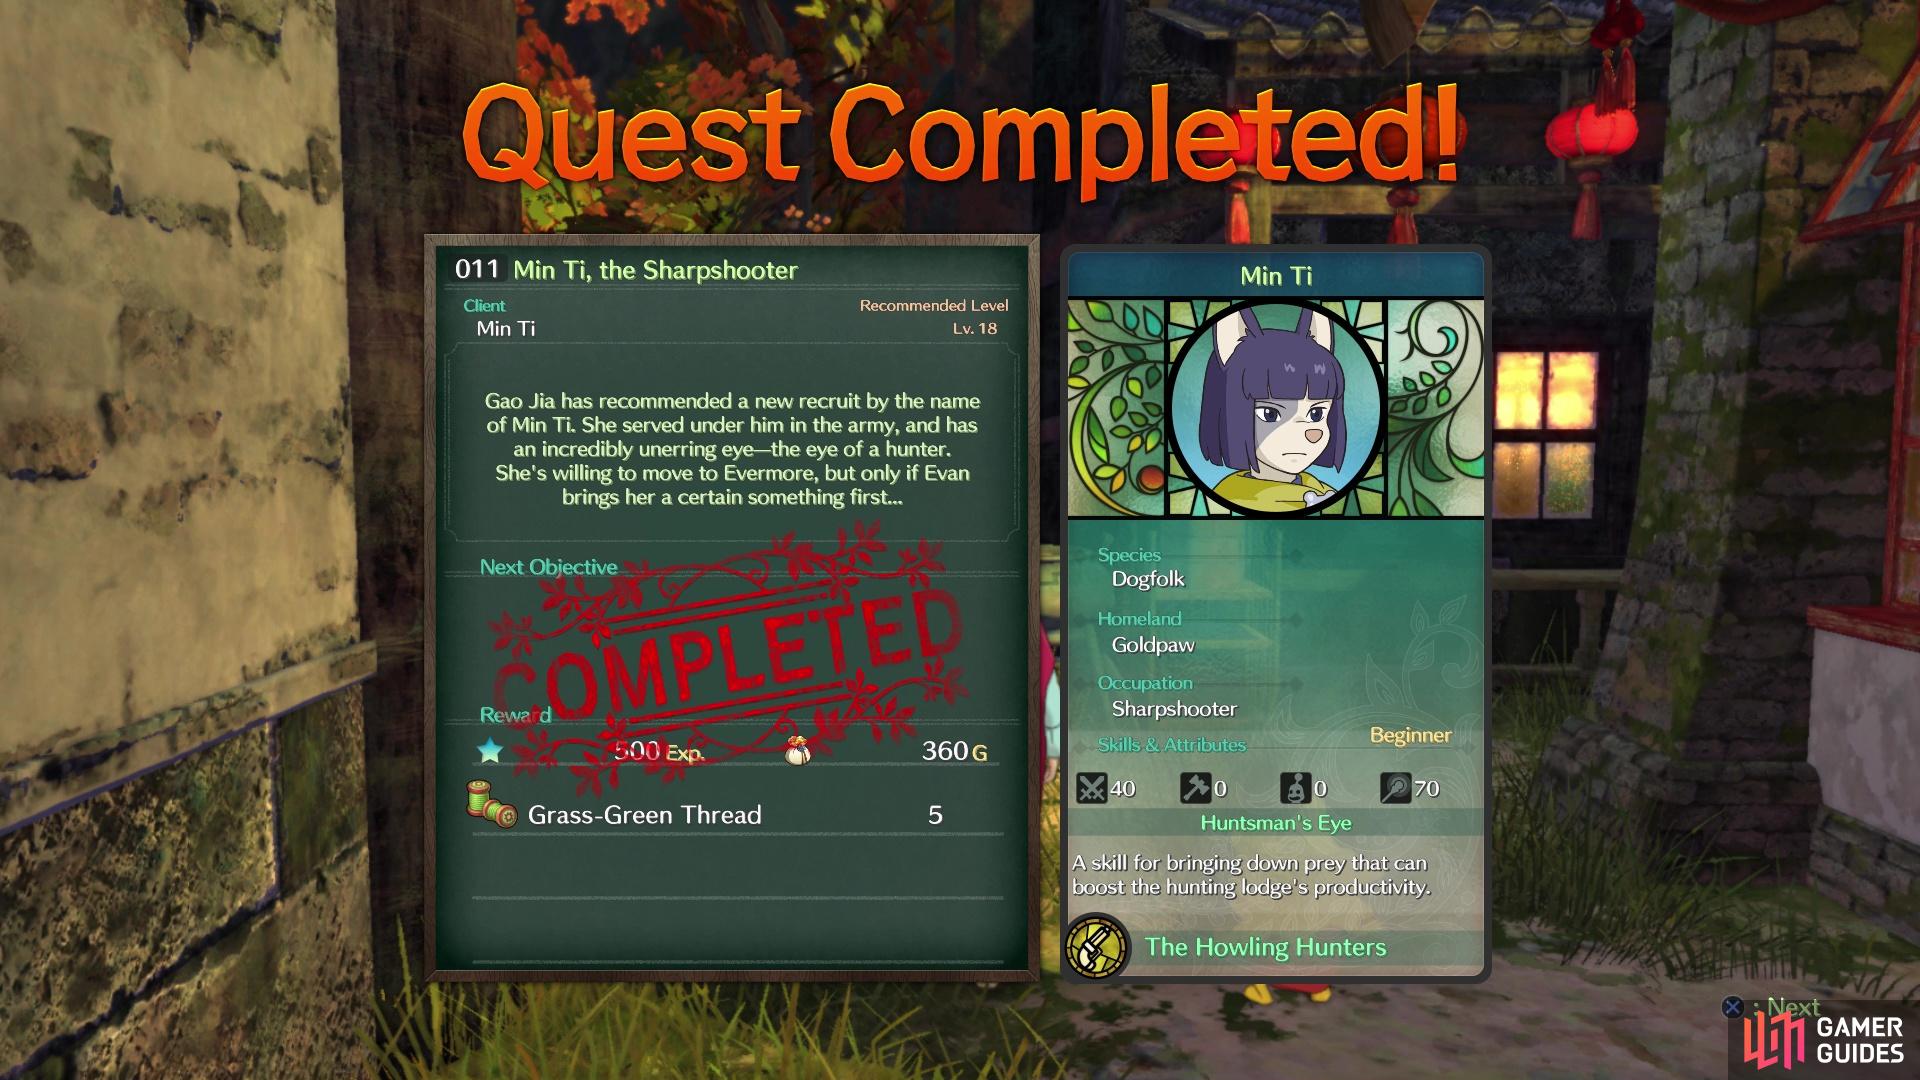 Finishing Min Ti's quest will reward you with Grass-Green Thread